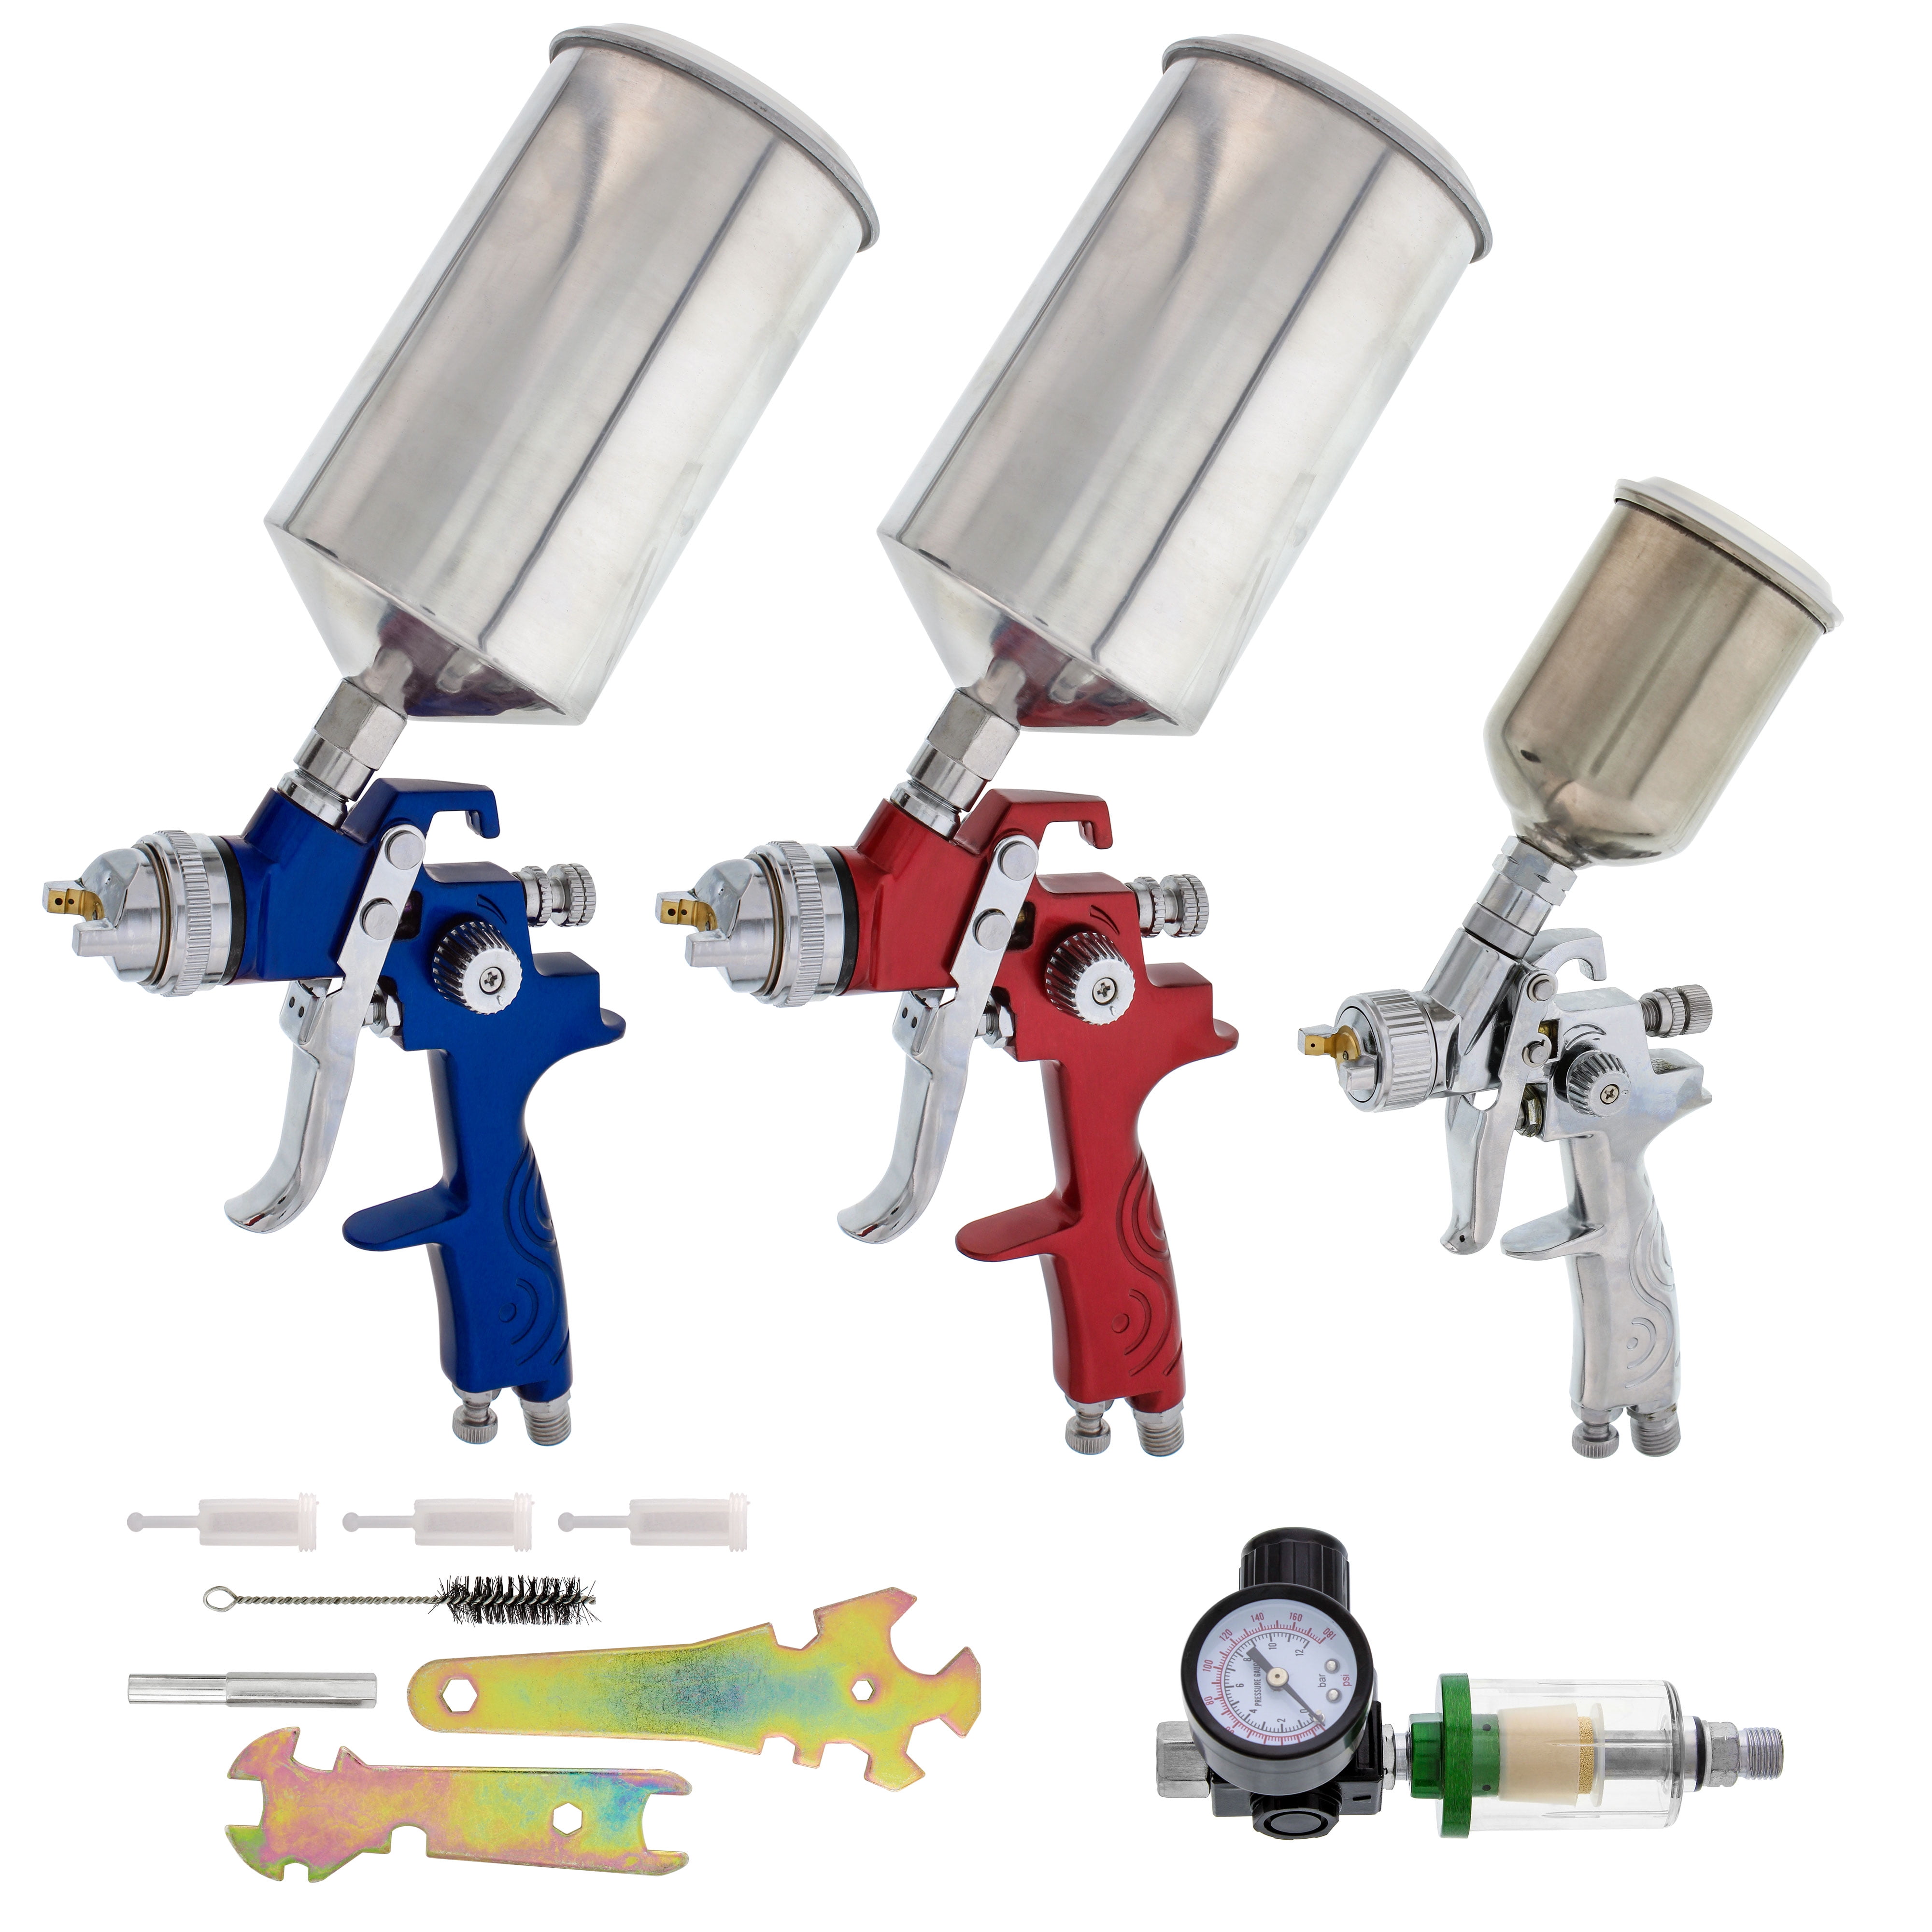 Vapor Water based HVLP Paint Automotive Gravity Fed Spray Gun Kit With Case 